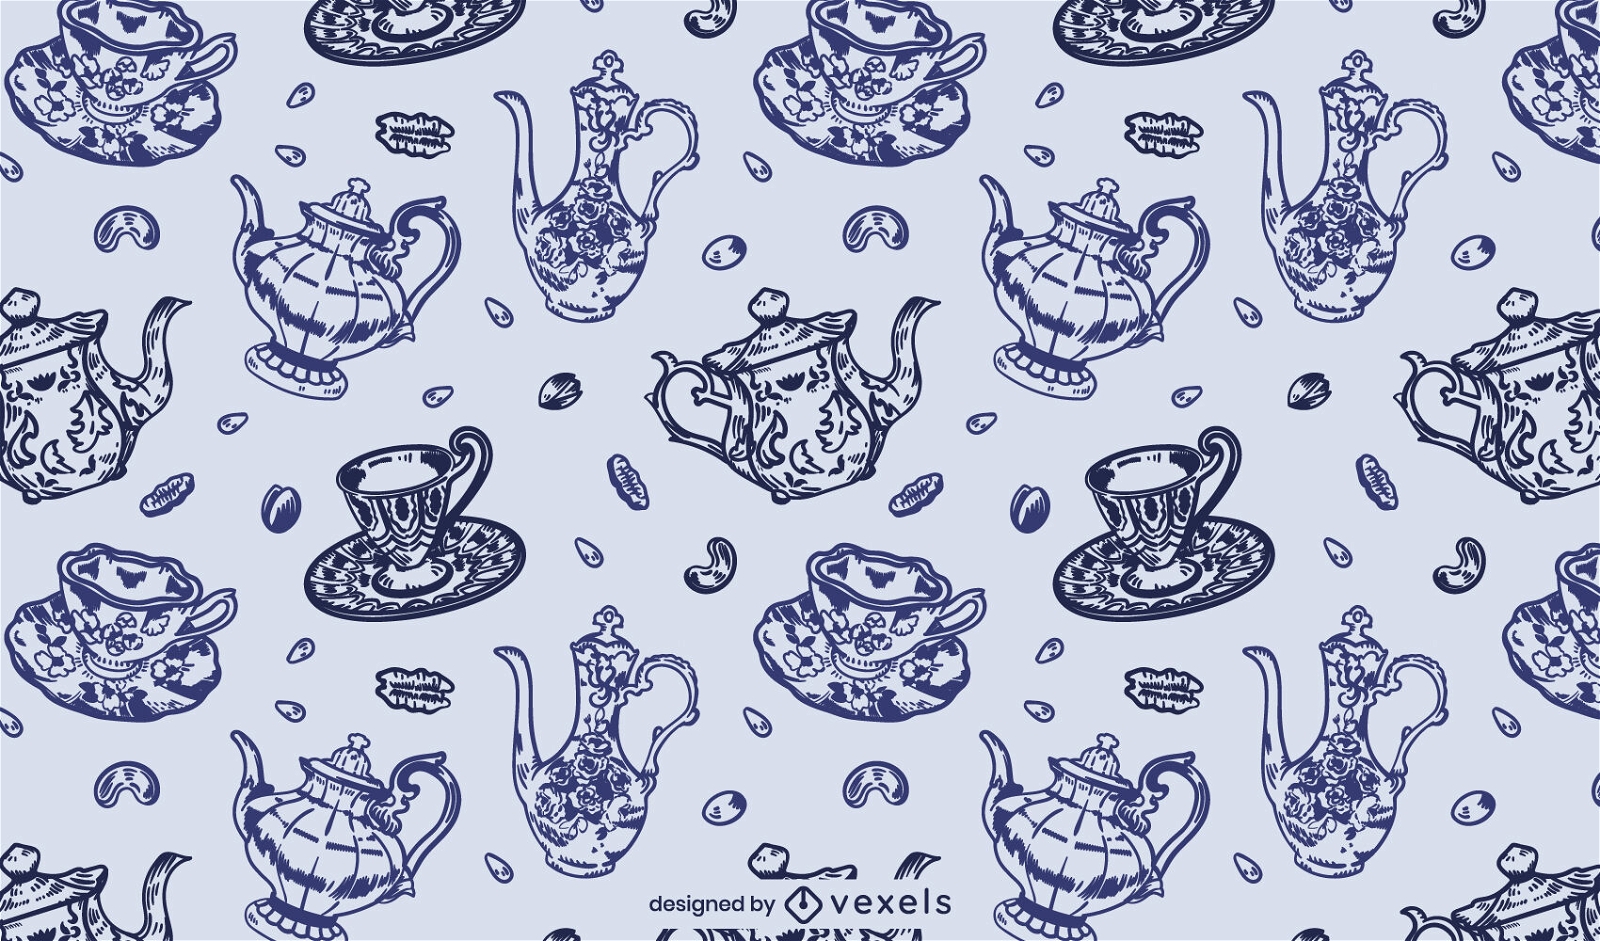 Vintage teapot and teacup pattern design